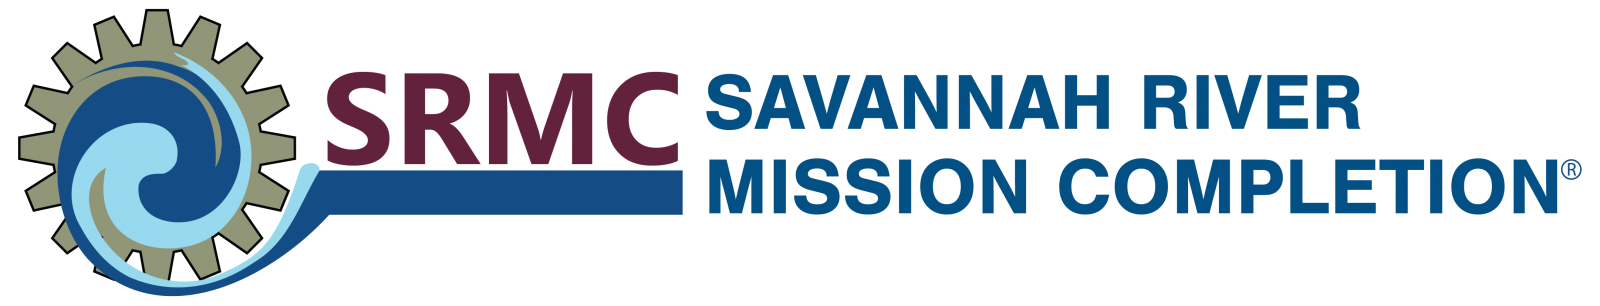 Savannah River Mission Completion logo